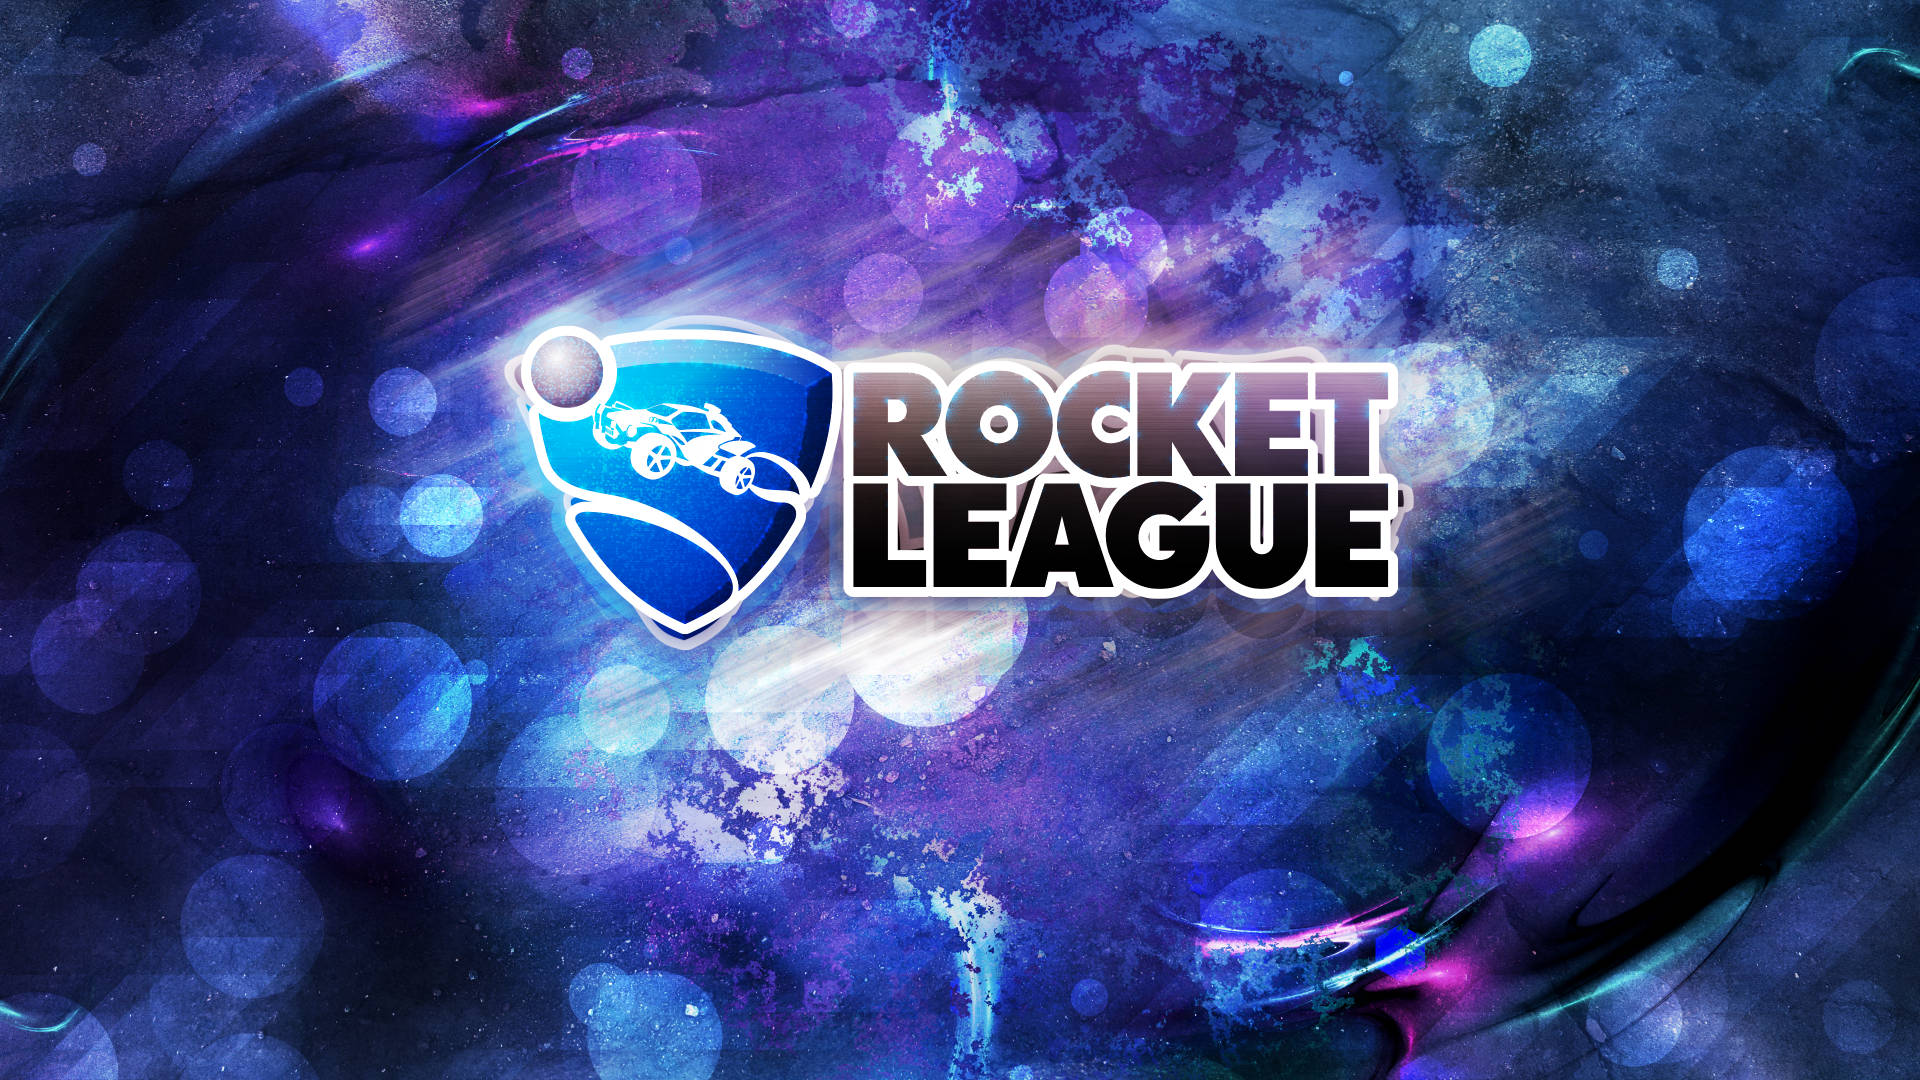 Rocket League Sticker 1920x1080 Wallpaper